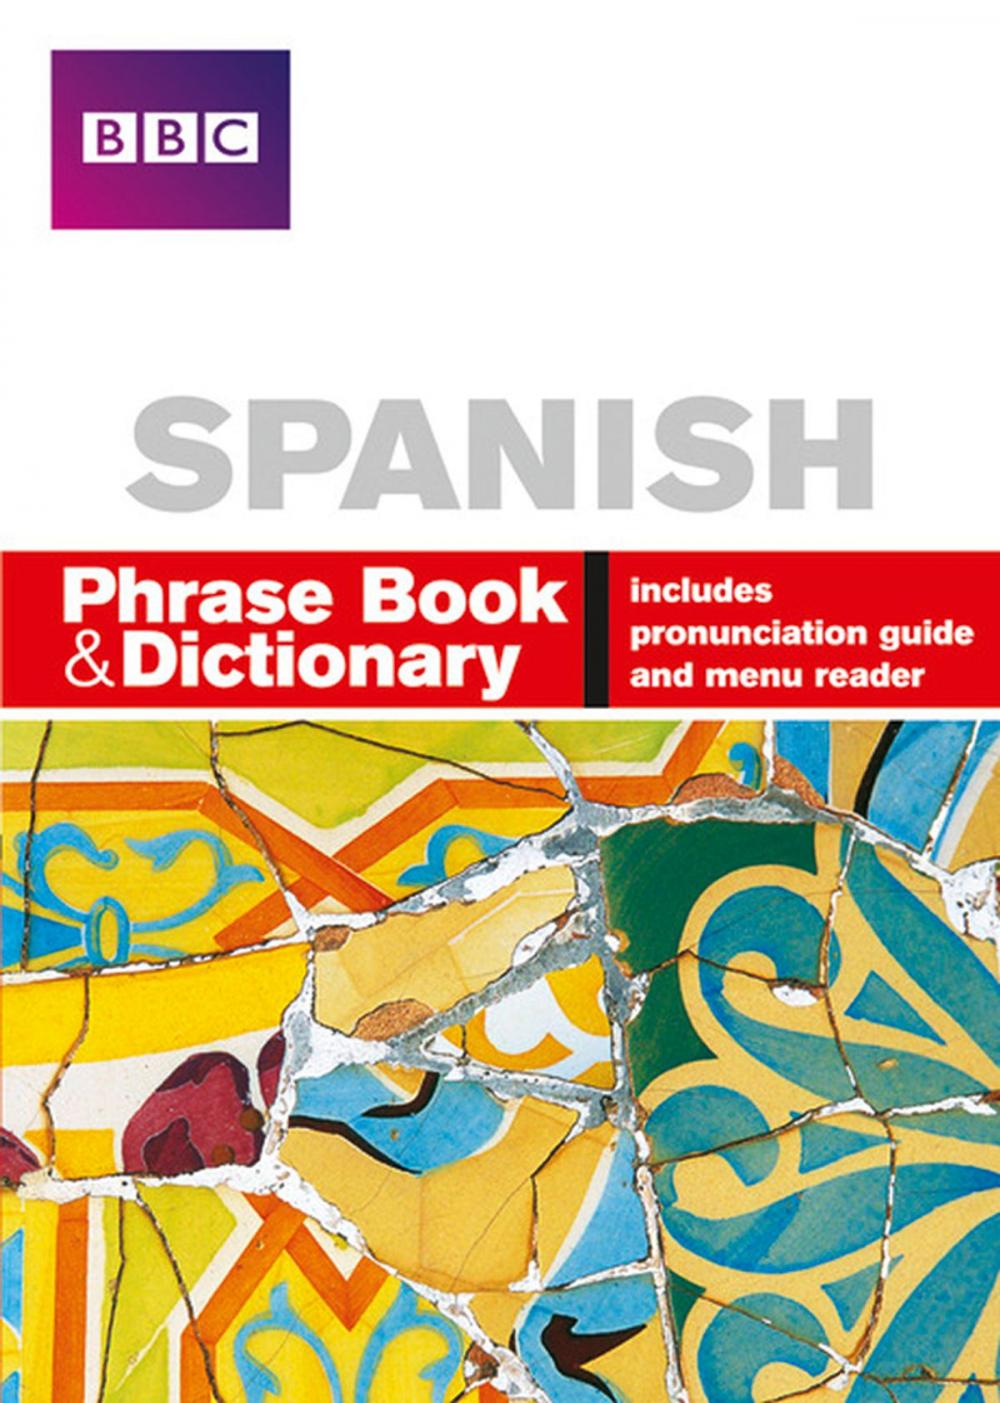 Big bigCover of BBC SPANISH PHRASE BOOK & DICTIONARY